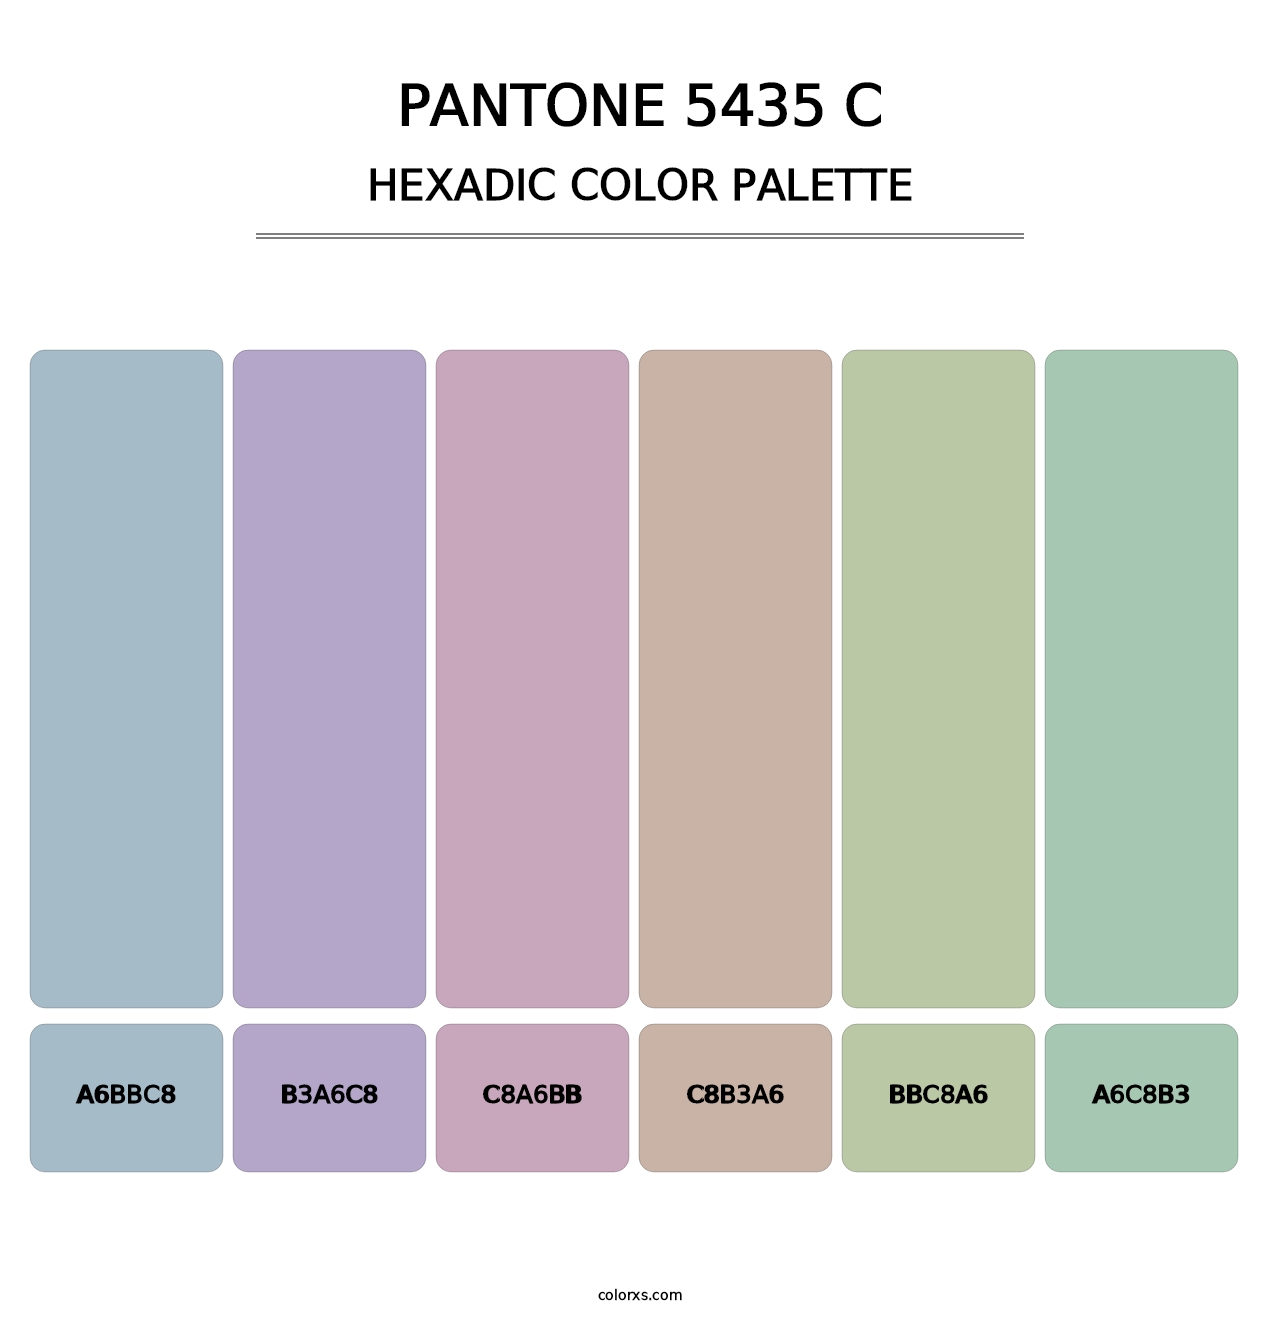 PANTONE 5435 C - Hexadic Color Palette